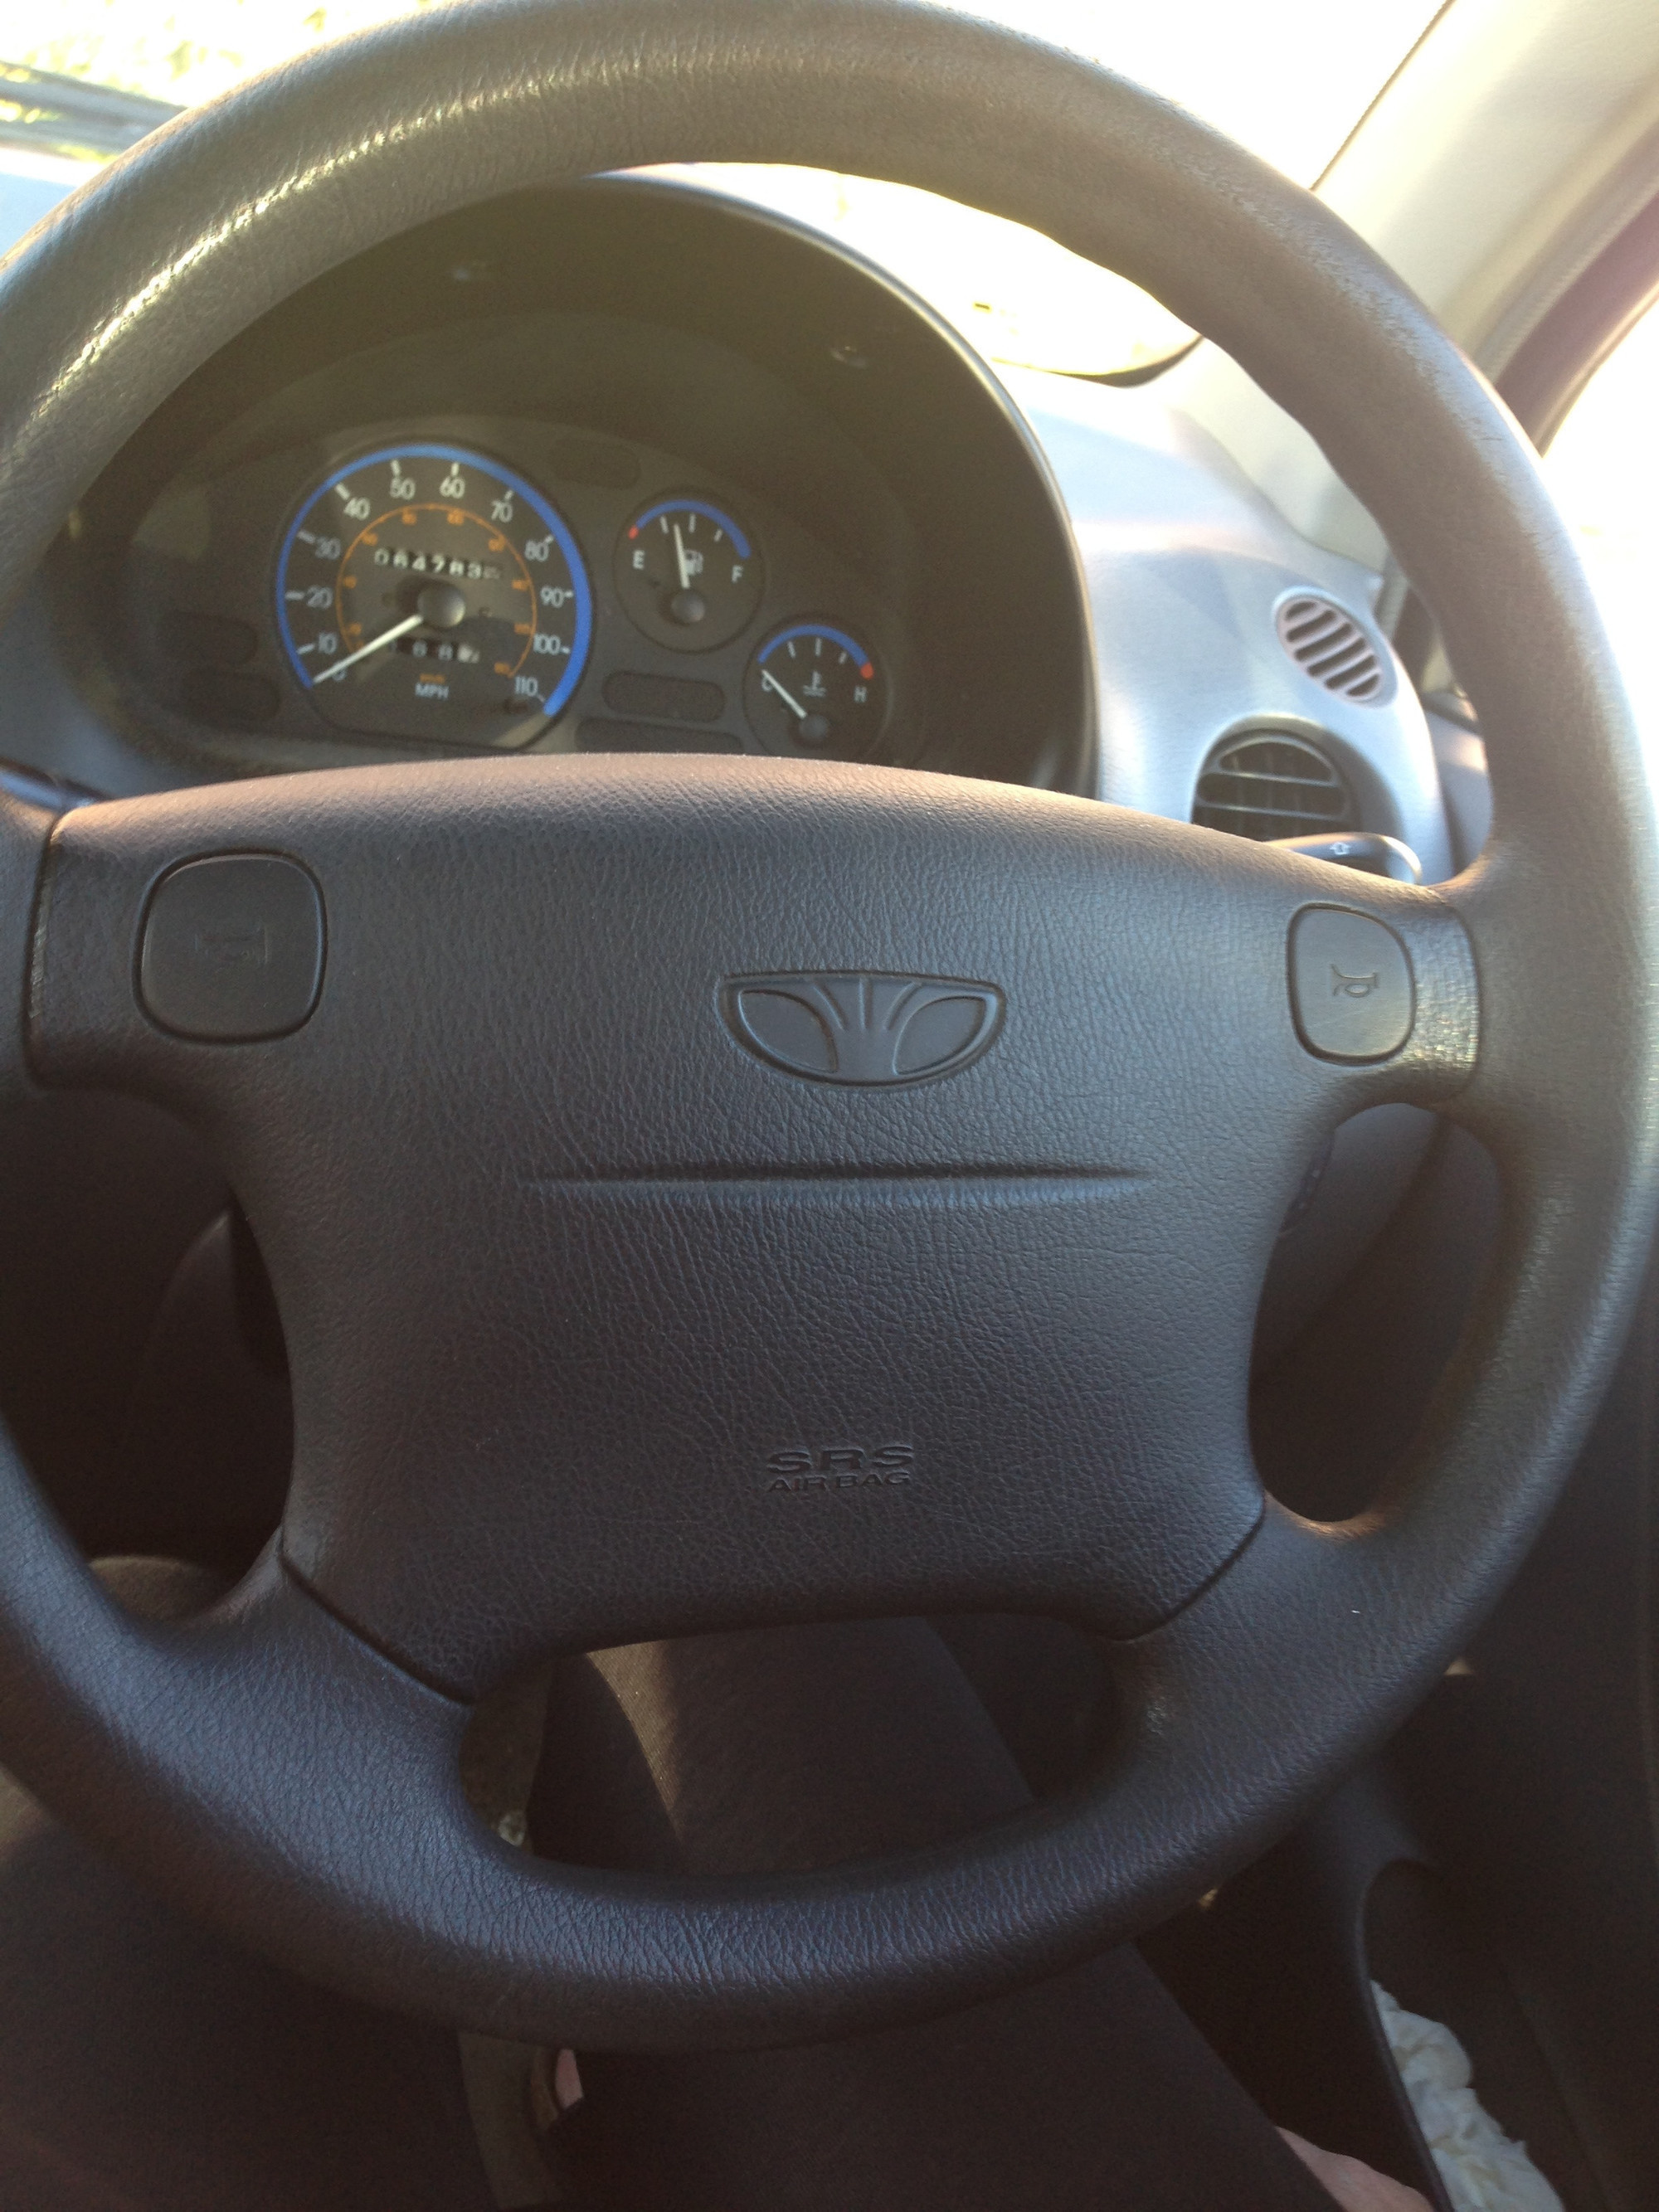 This steering wheel looks like a judgmental sloth.